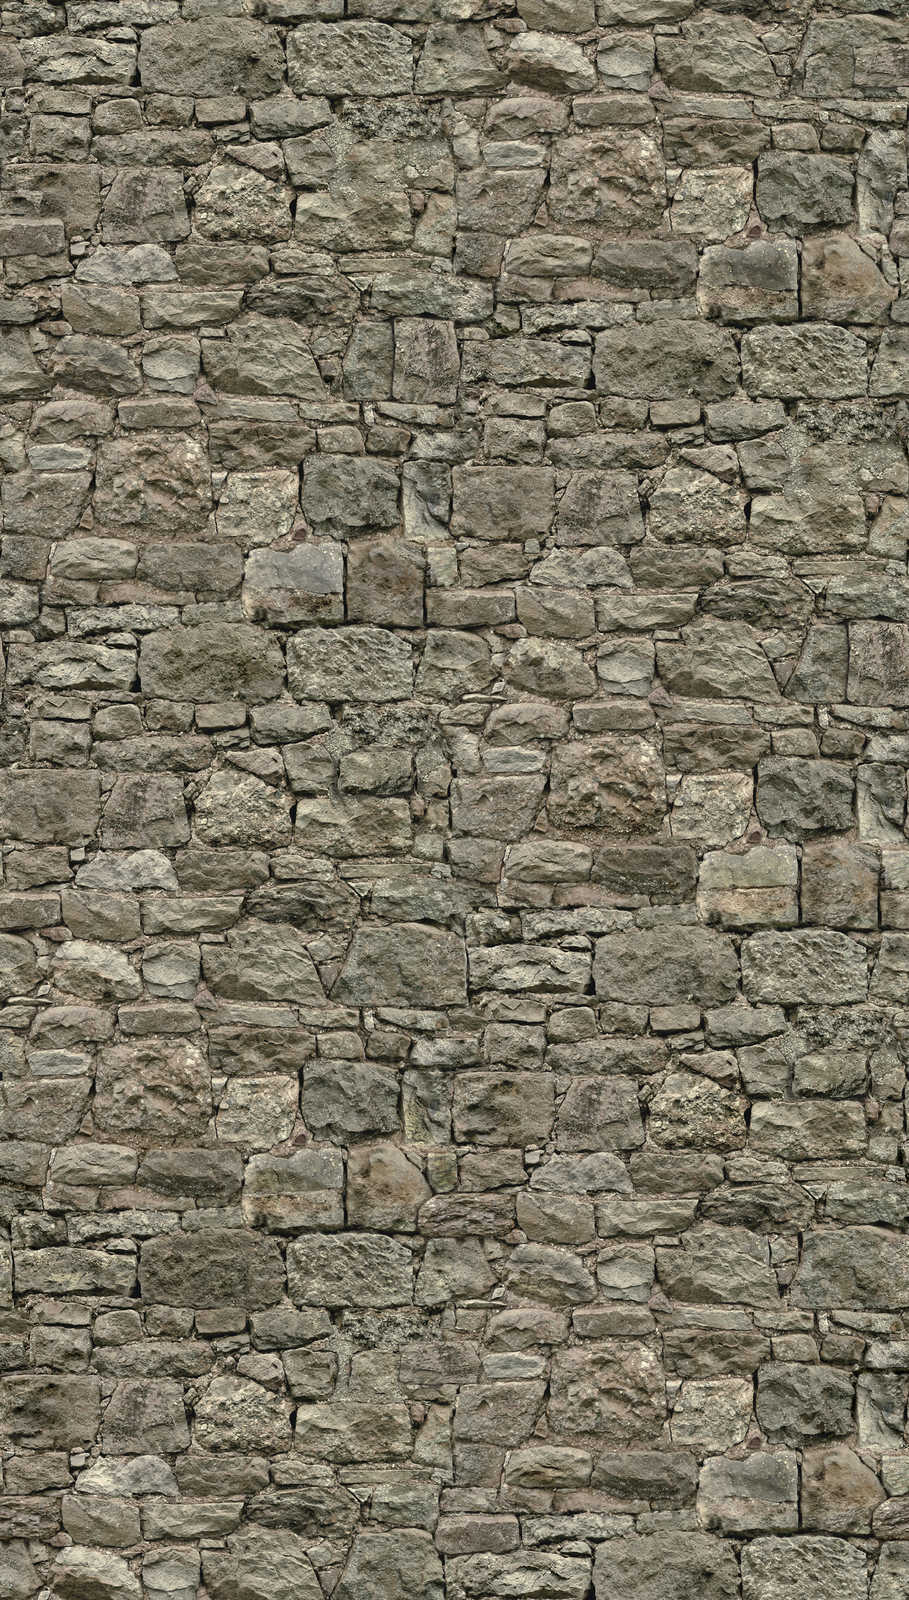             Non-woven wallpaper stone look wall in dark colours - grey, beige
        